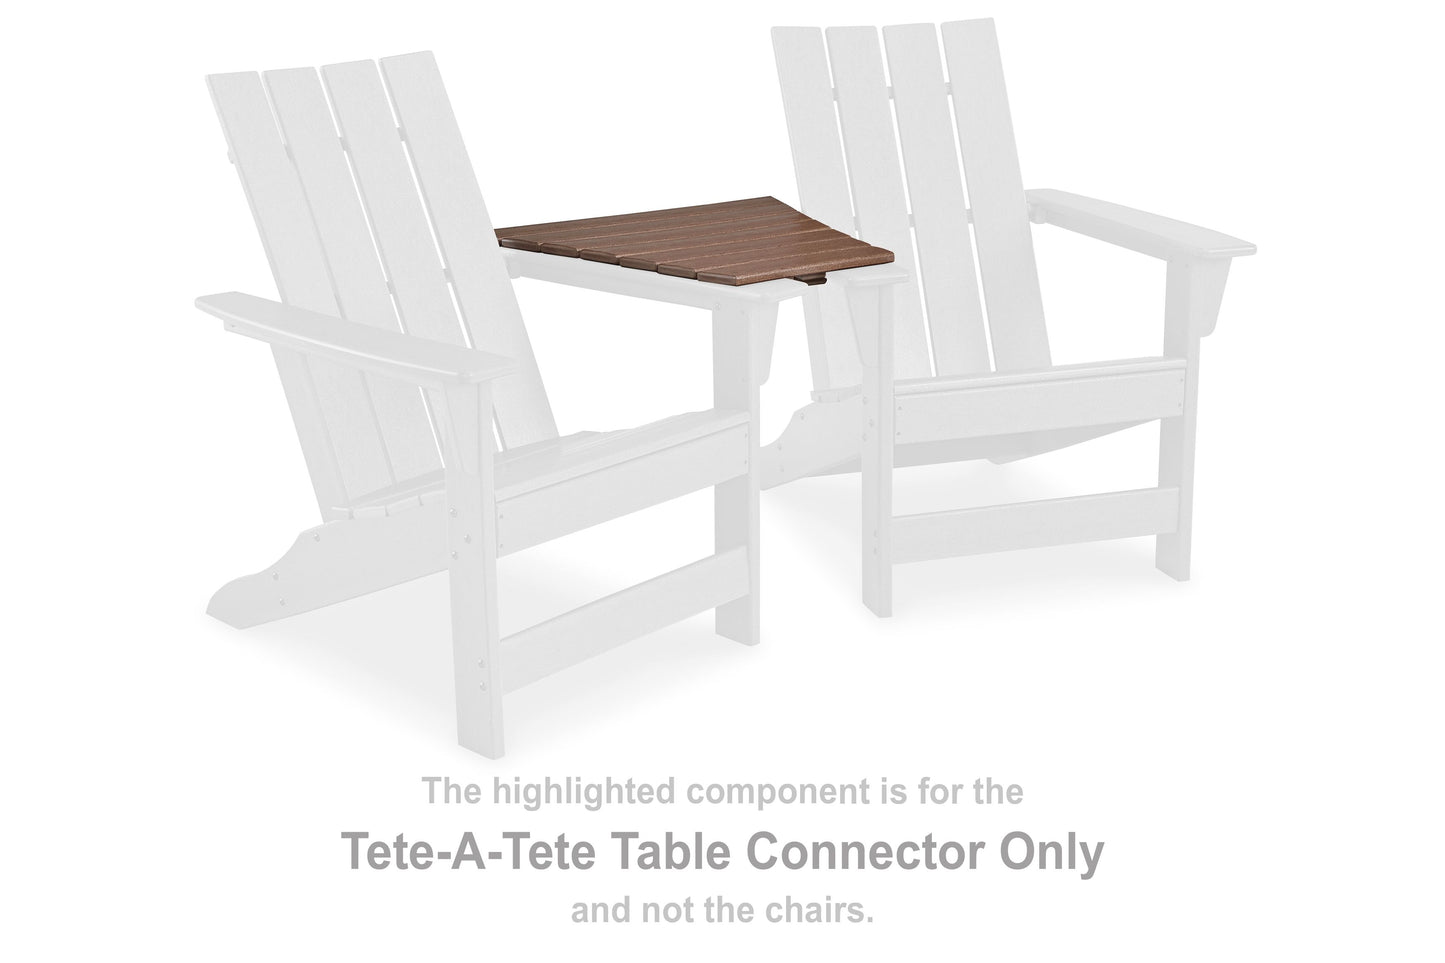 Emmeline - Brown - Tete-a-tete Table Connector